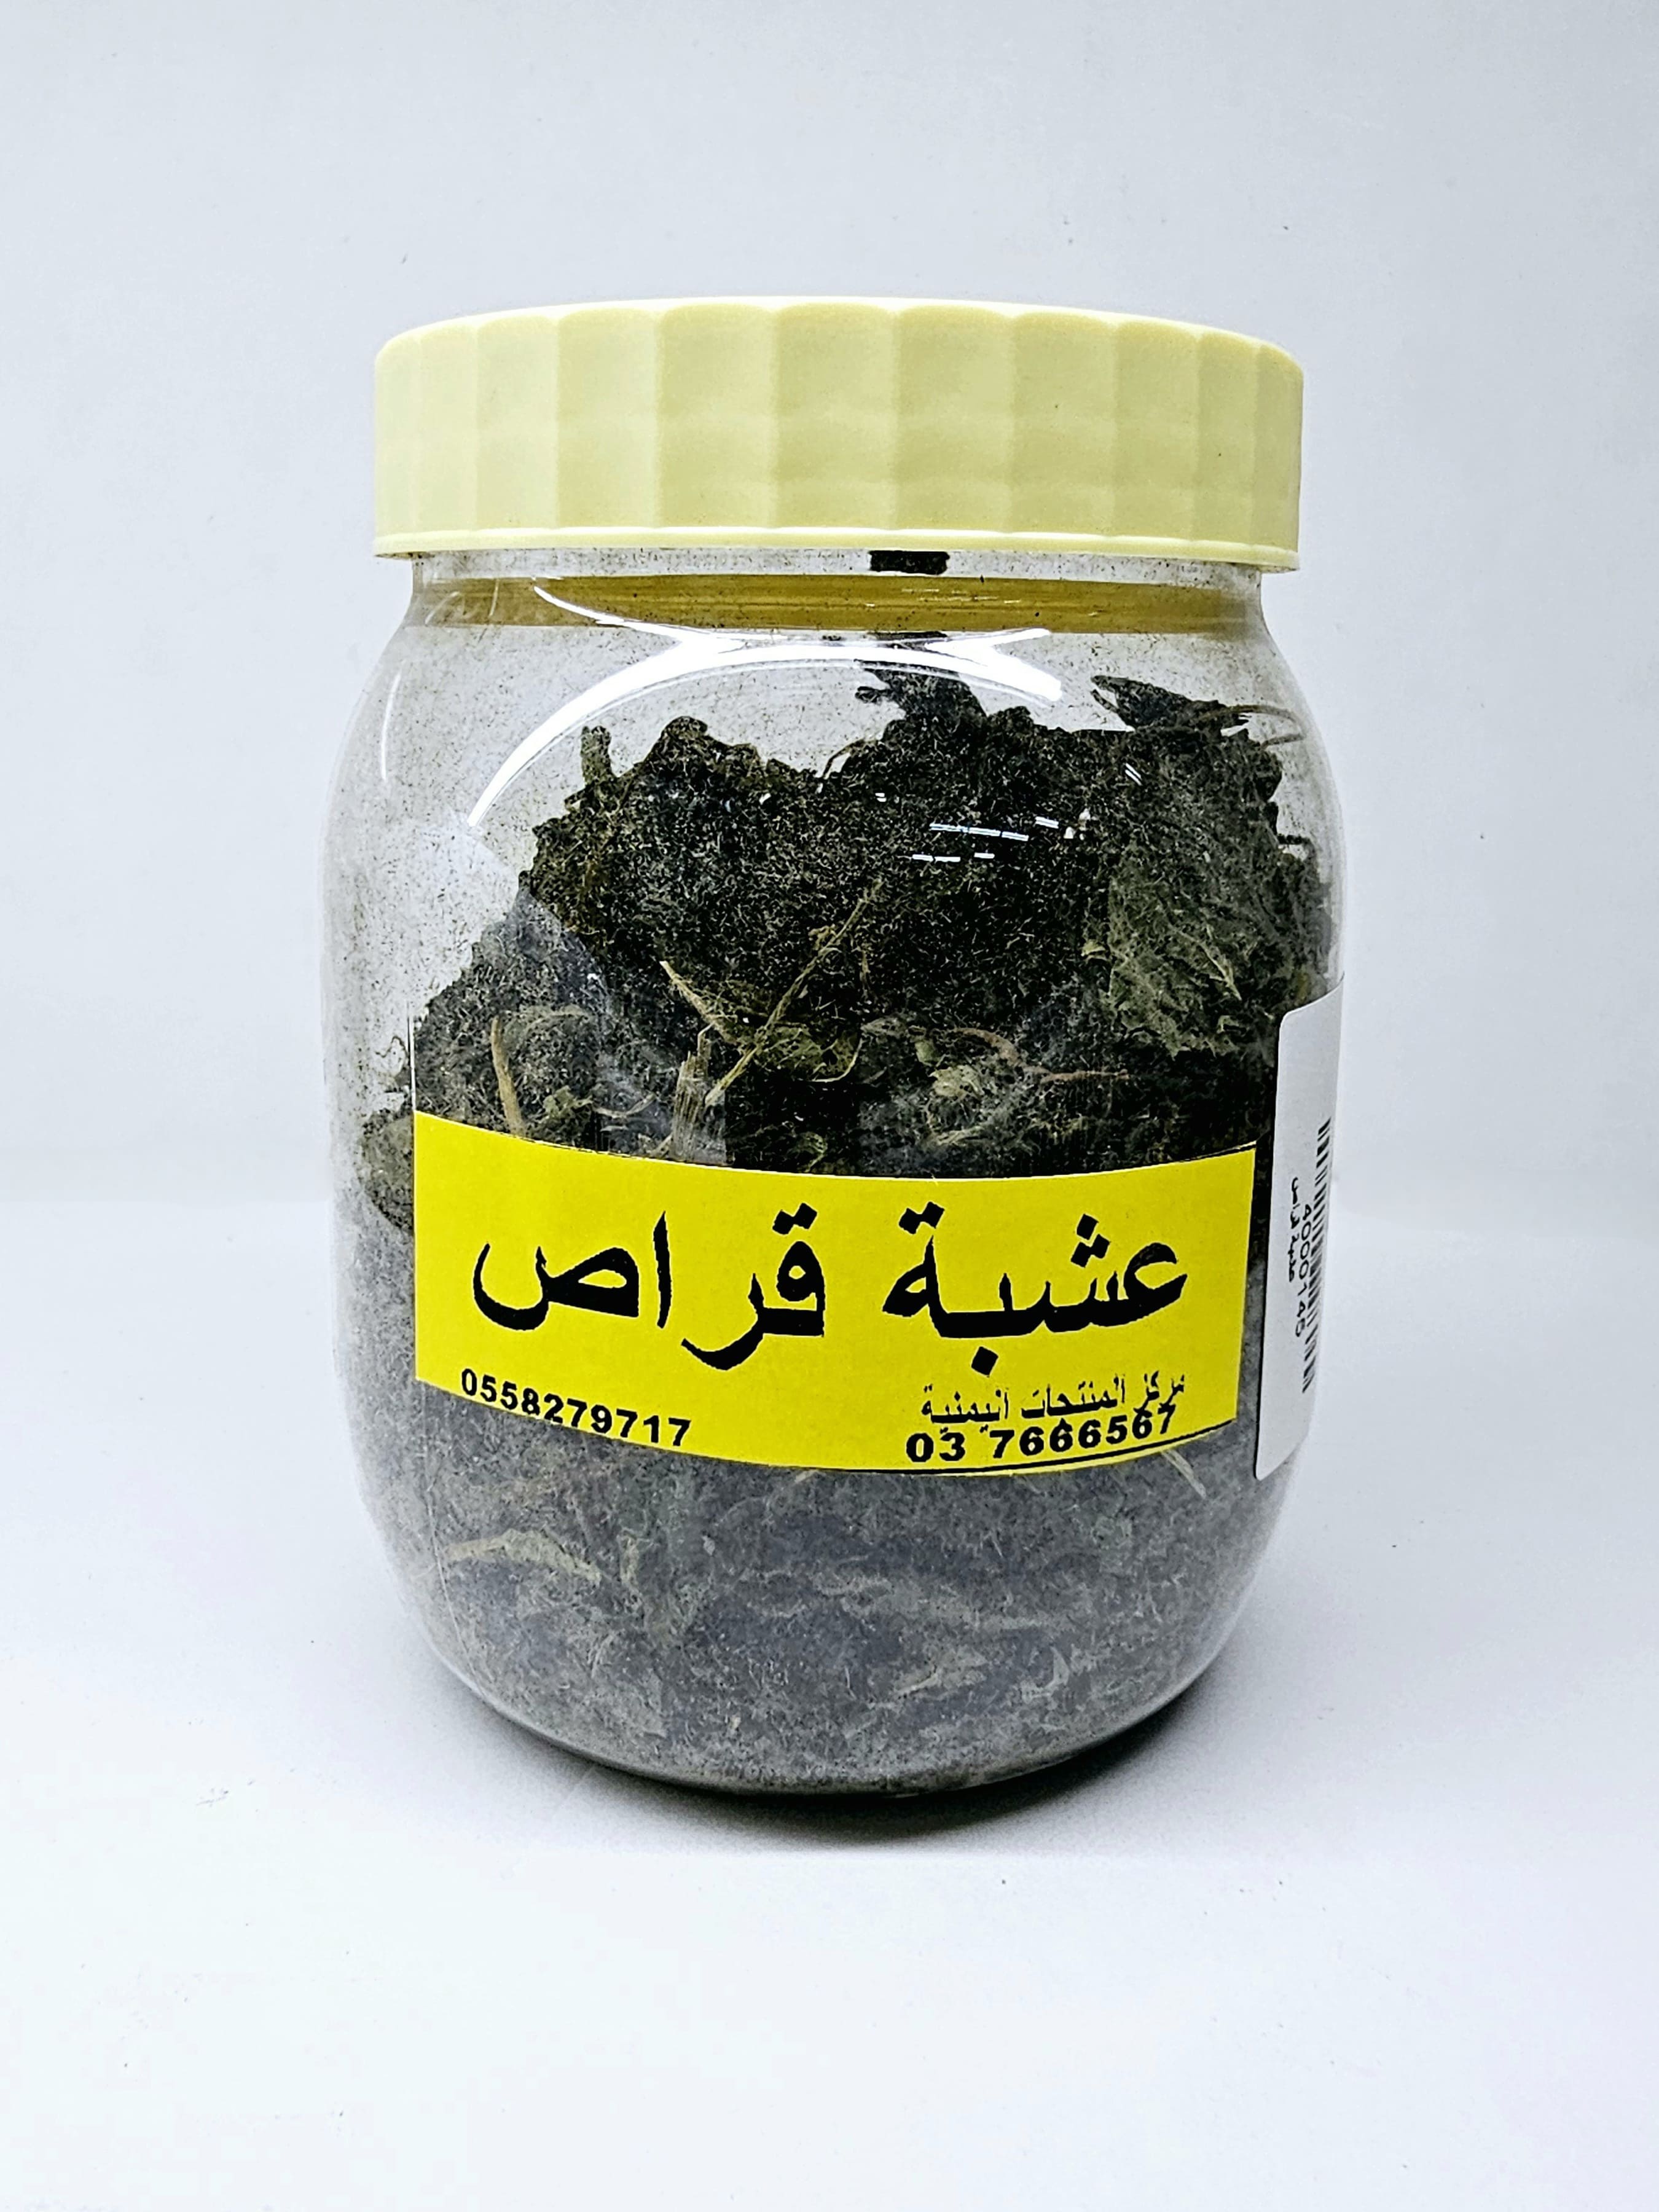 Nettle herb